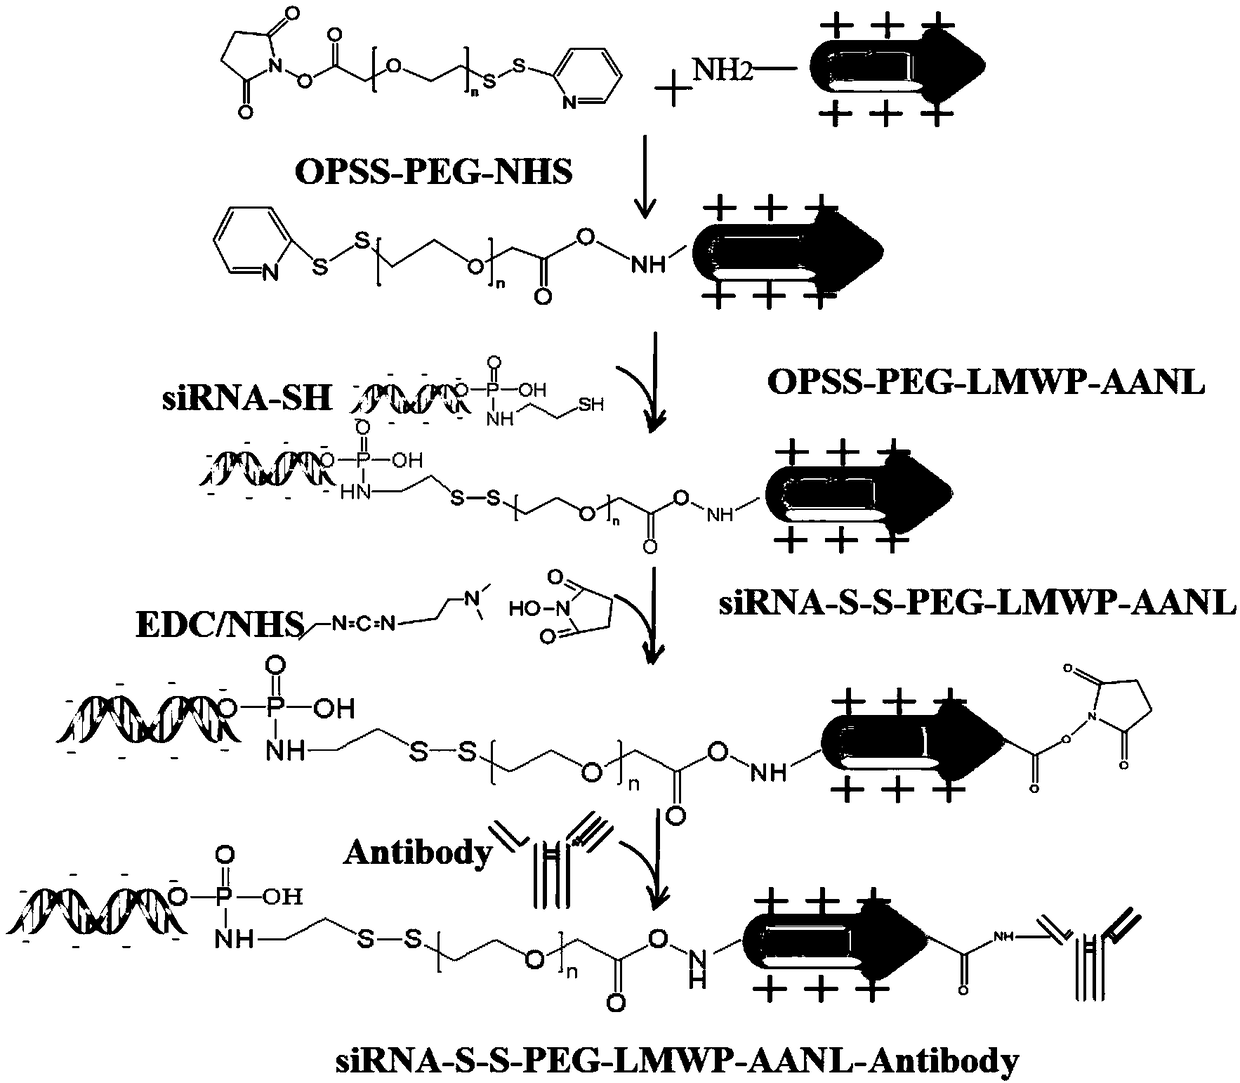 Antibody nucleic acid drug conjugate with dual enzyme-sensitive properties, preparation method of conjugate and application of conjugate